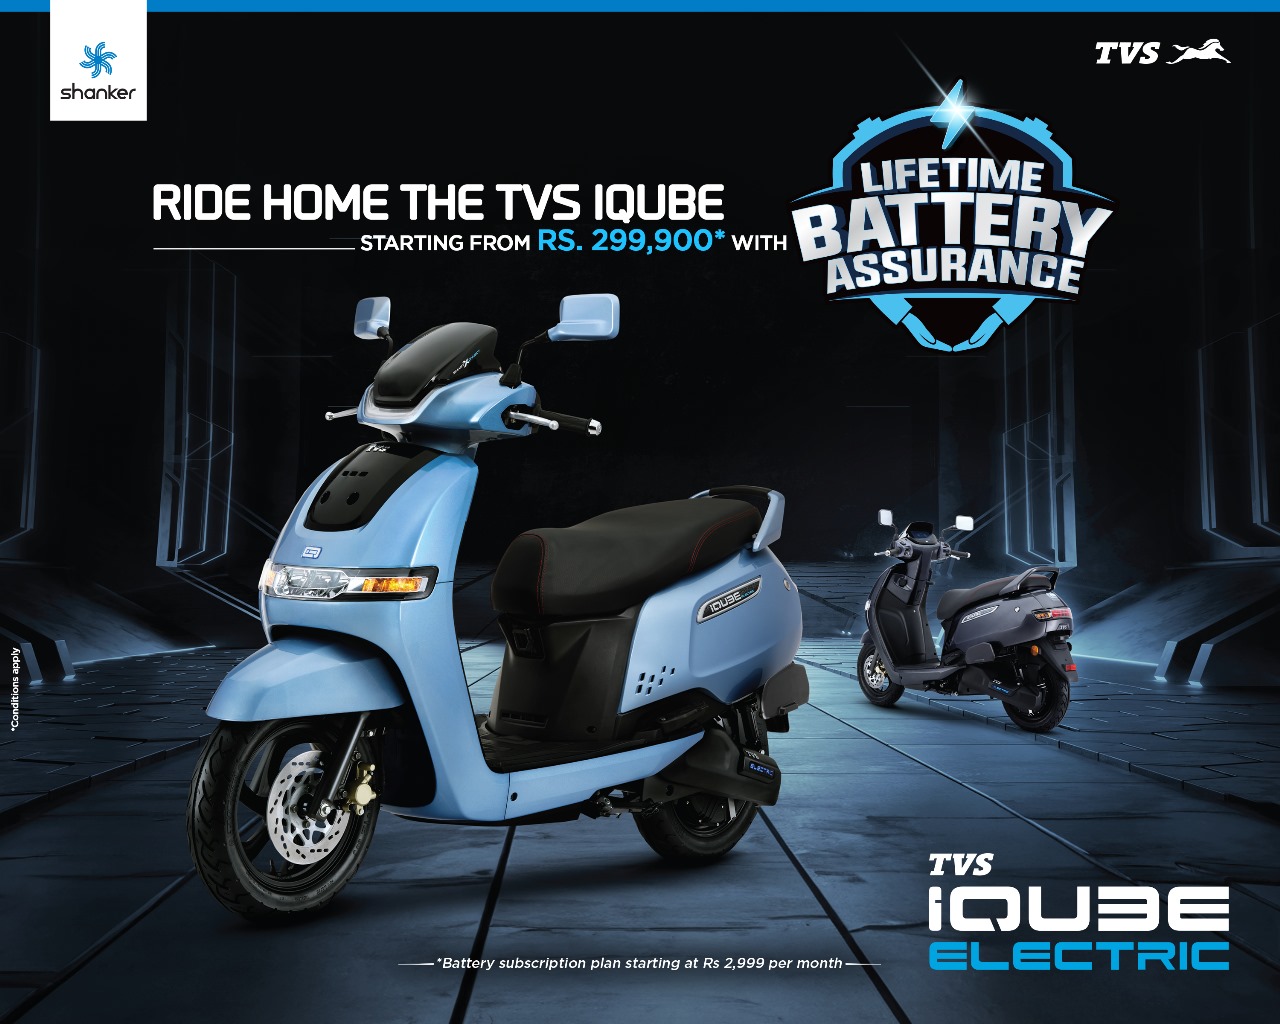 TVS iQube Electric Lifetime Battery Assurance program